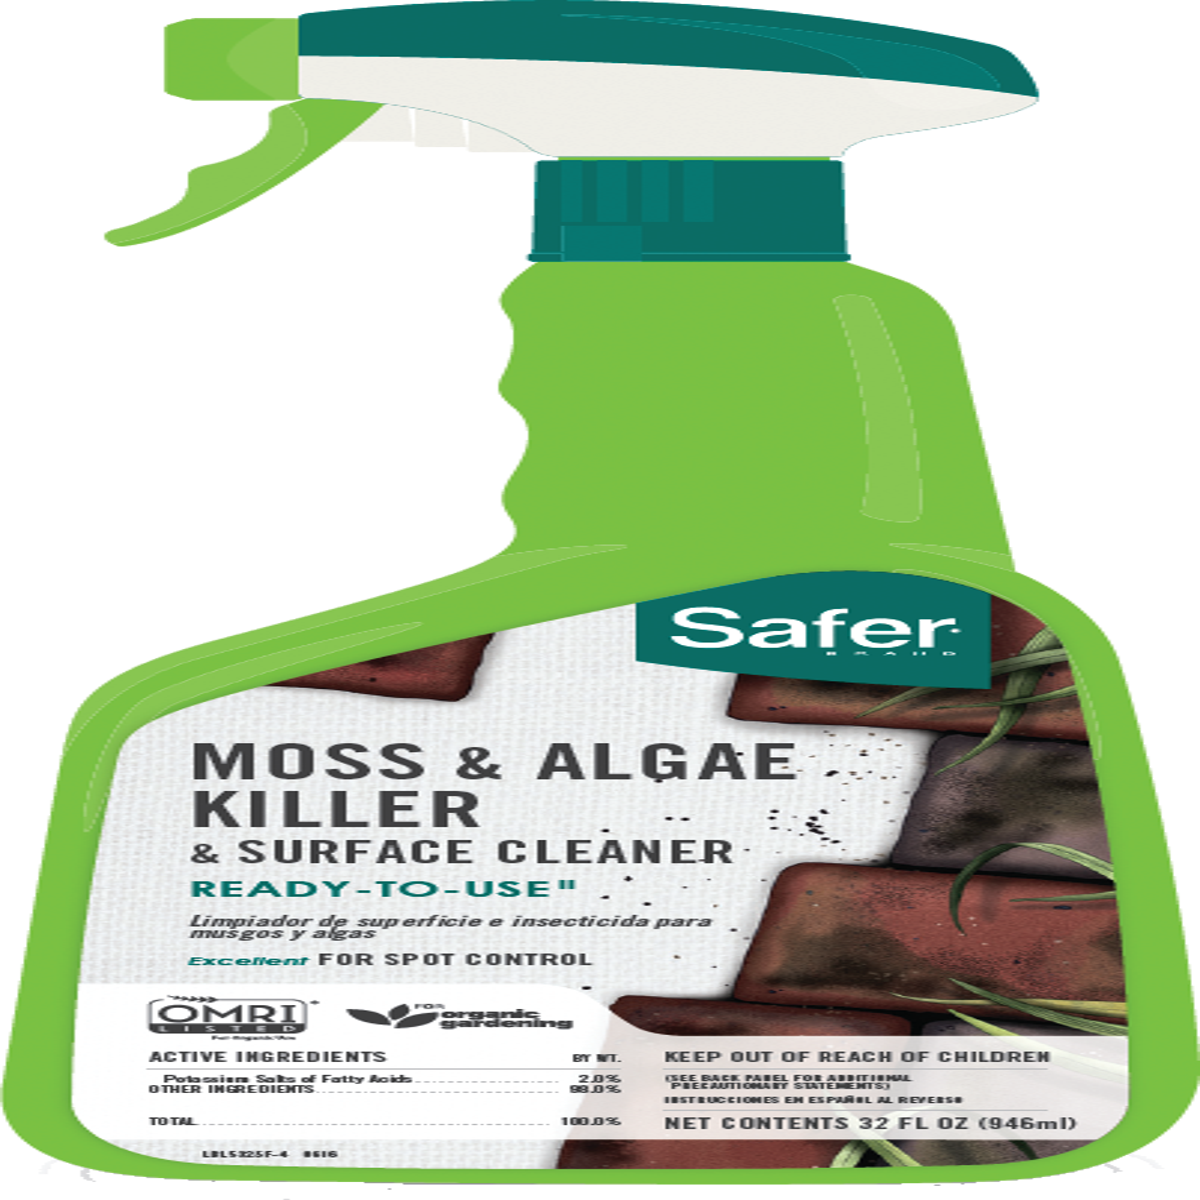 Moss & Algae Killers